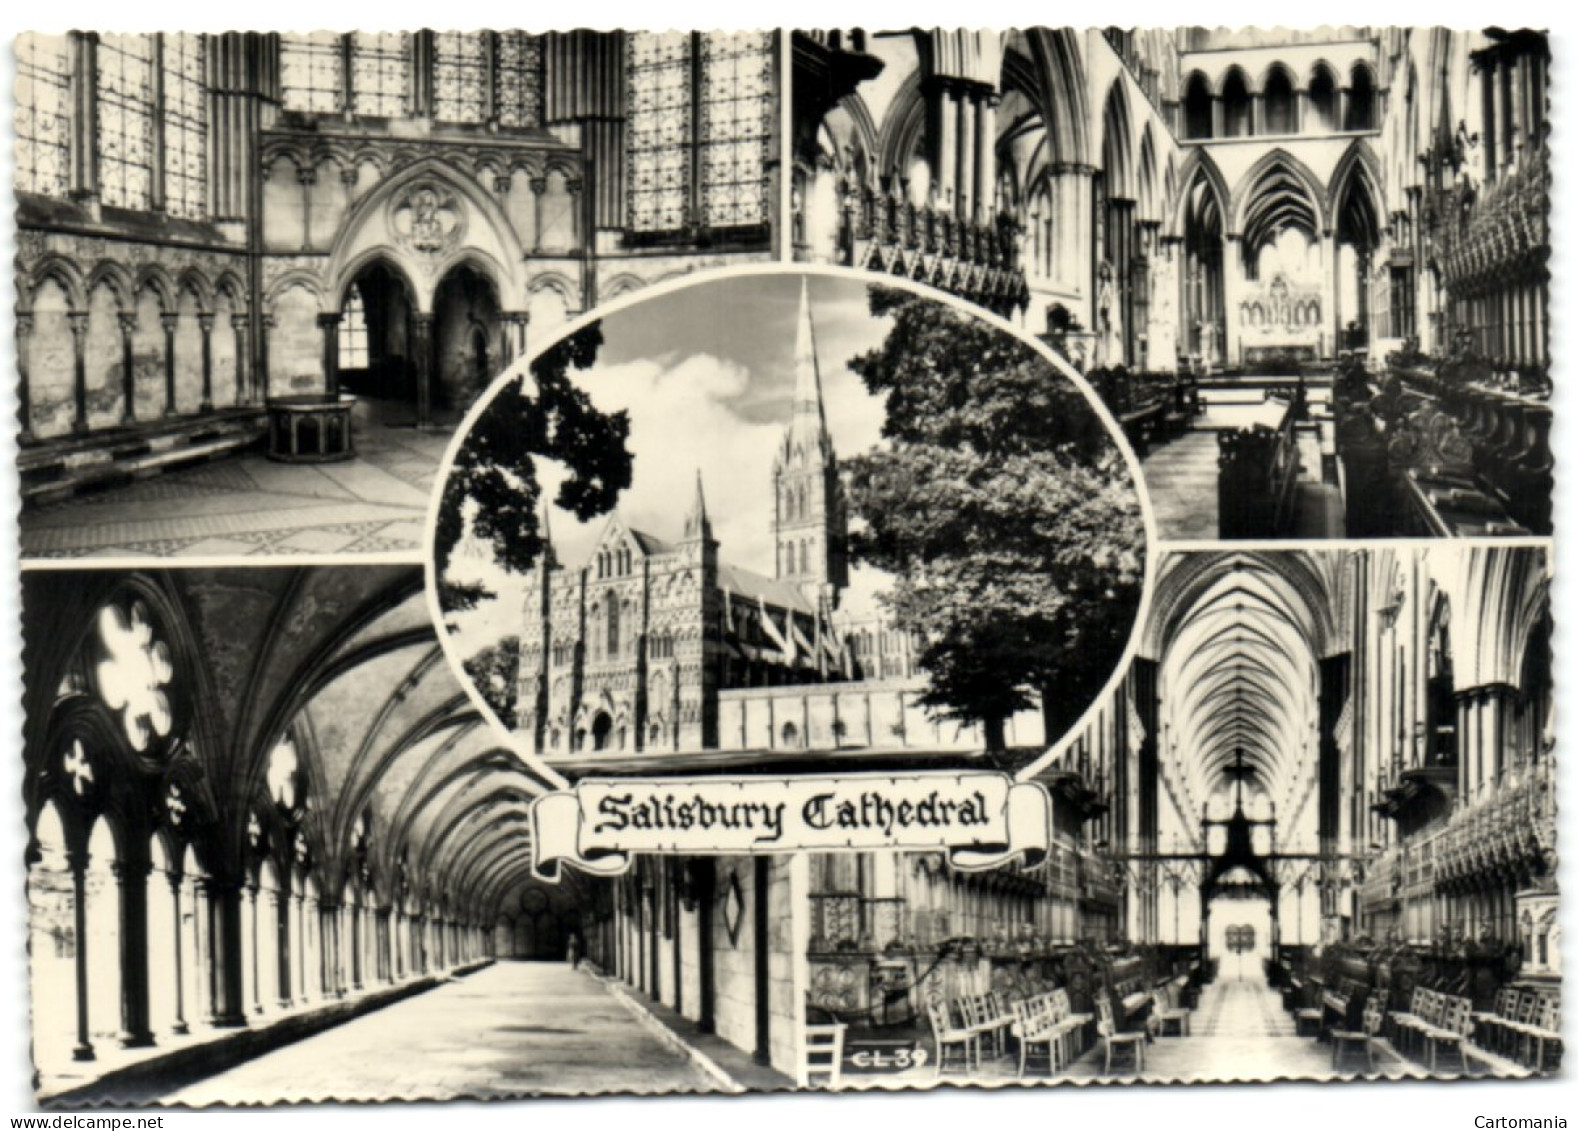 Salisbury Cathedral - Salisbury